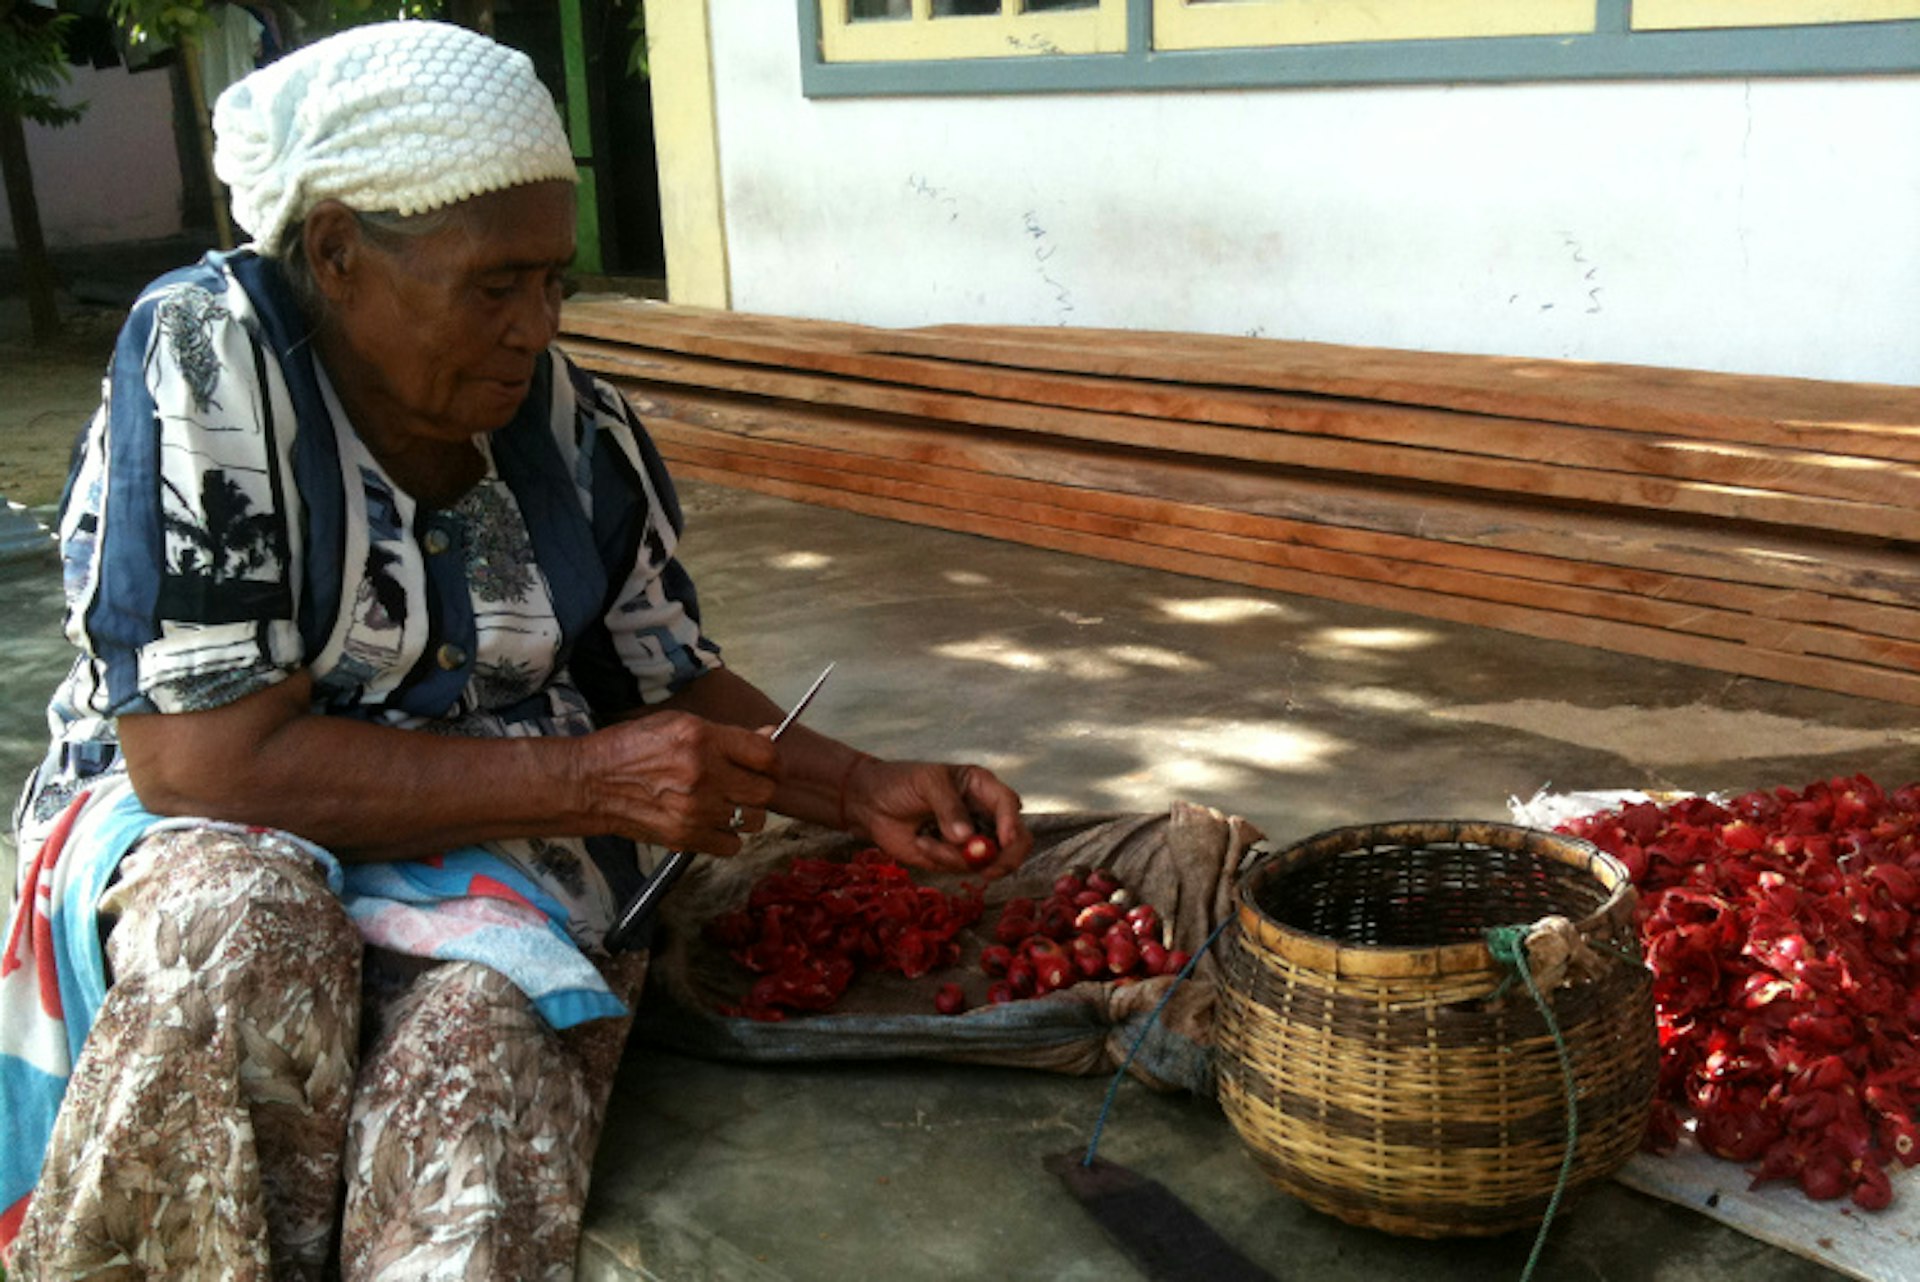 Vllage elder separating nutmeg and mace for drying, Maluku. Image by Hugh McNaughtan